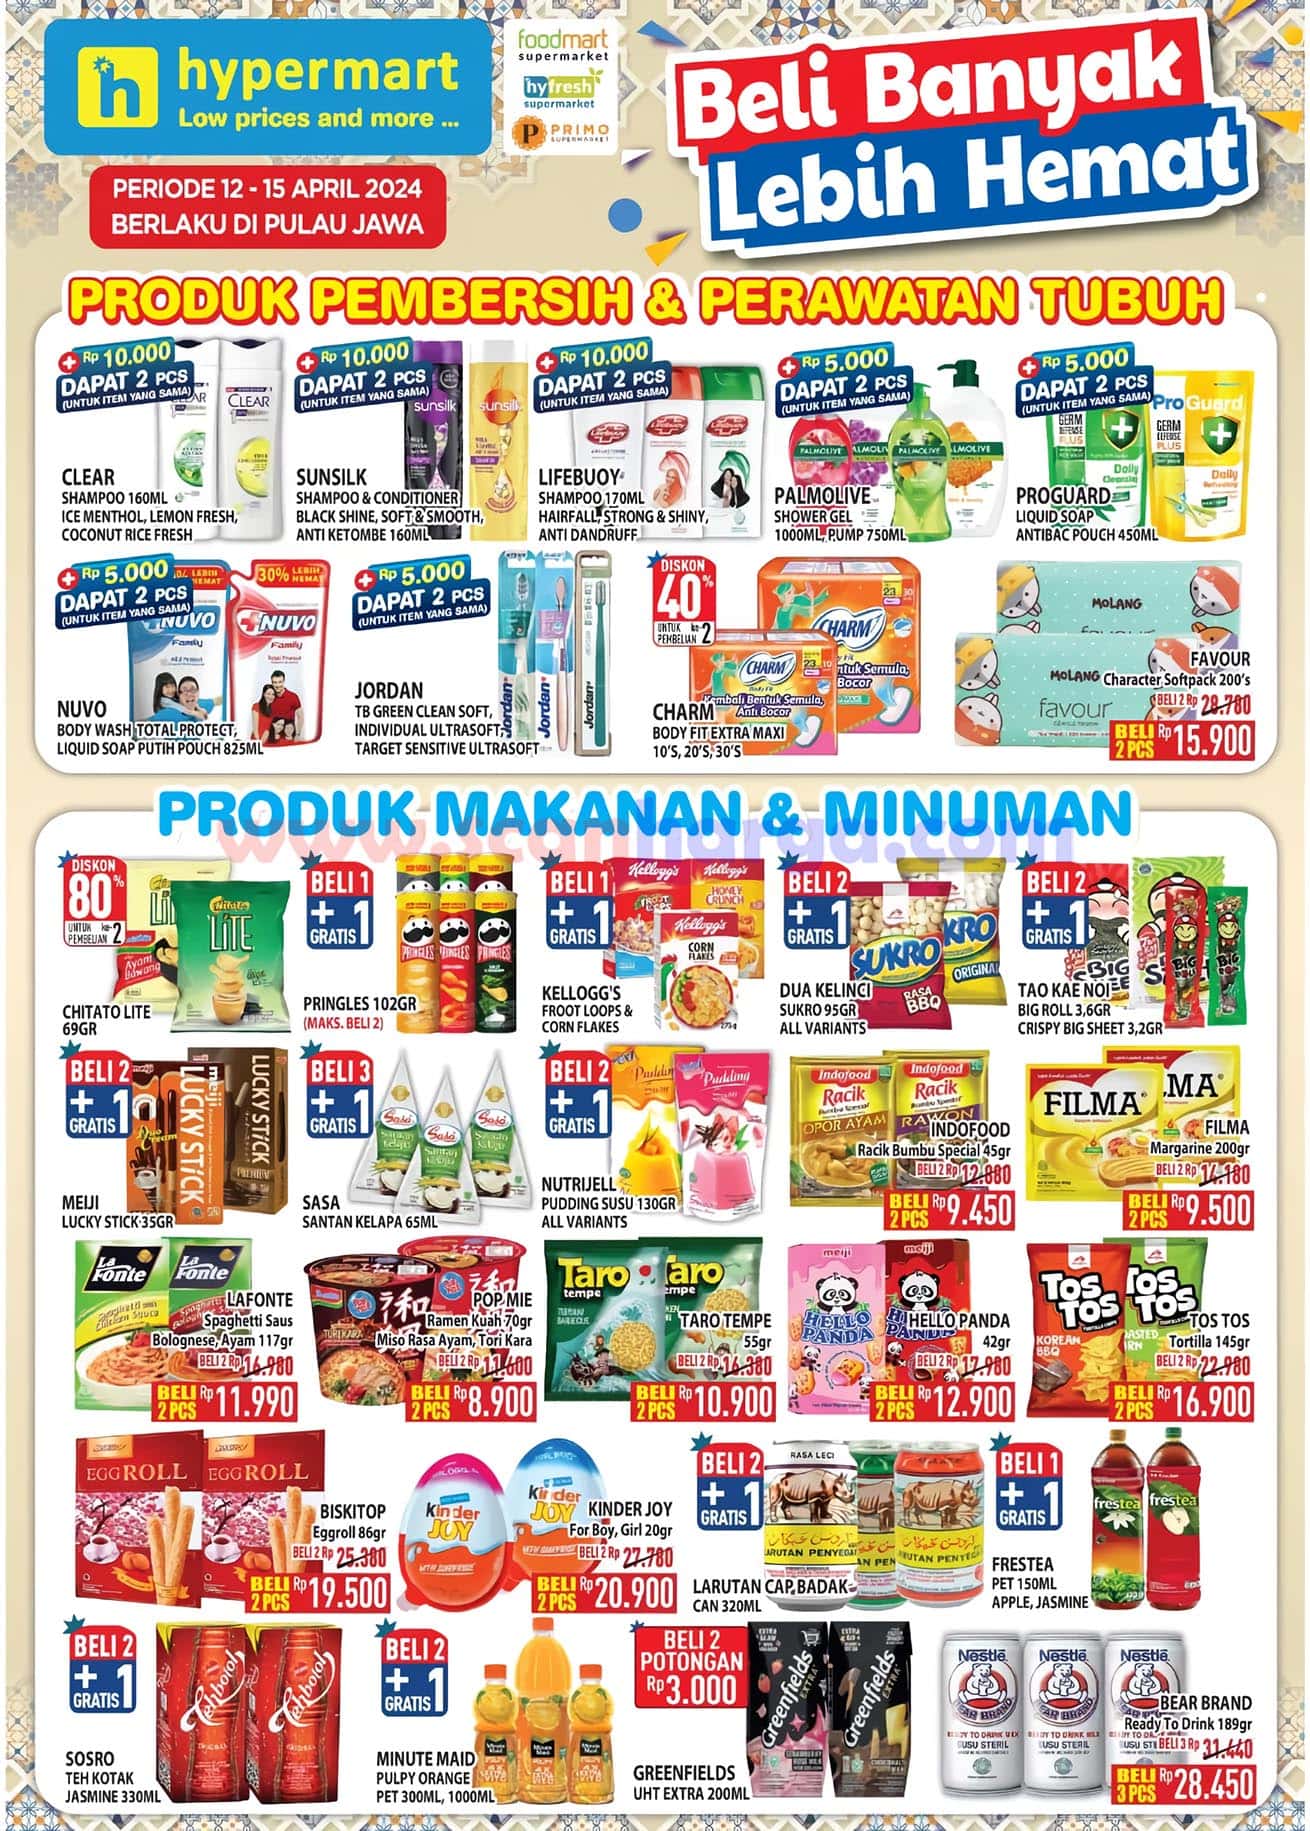 Katalog Promo JSM Hypermart Weekend Terbaru 12 - 15 April 2024 3